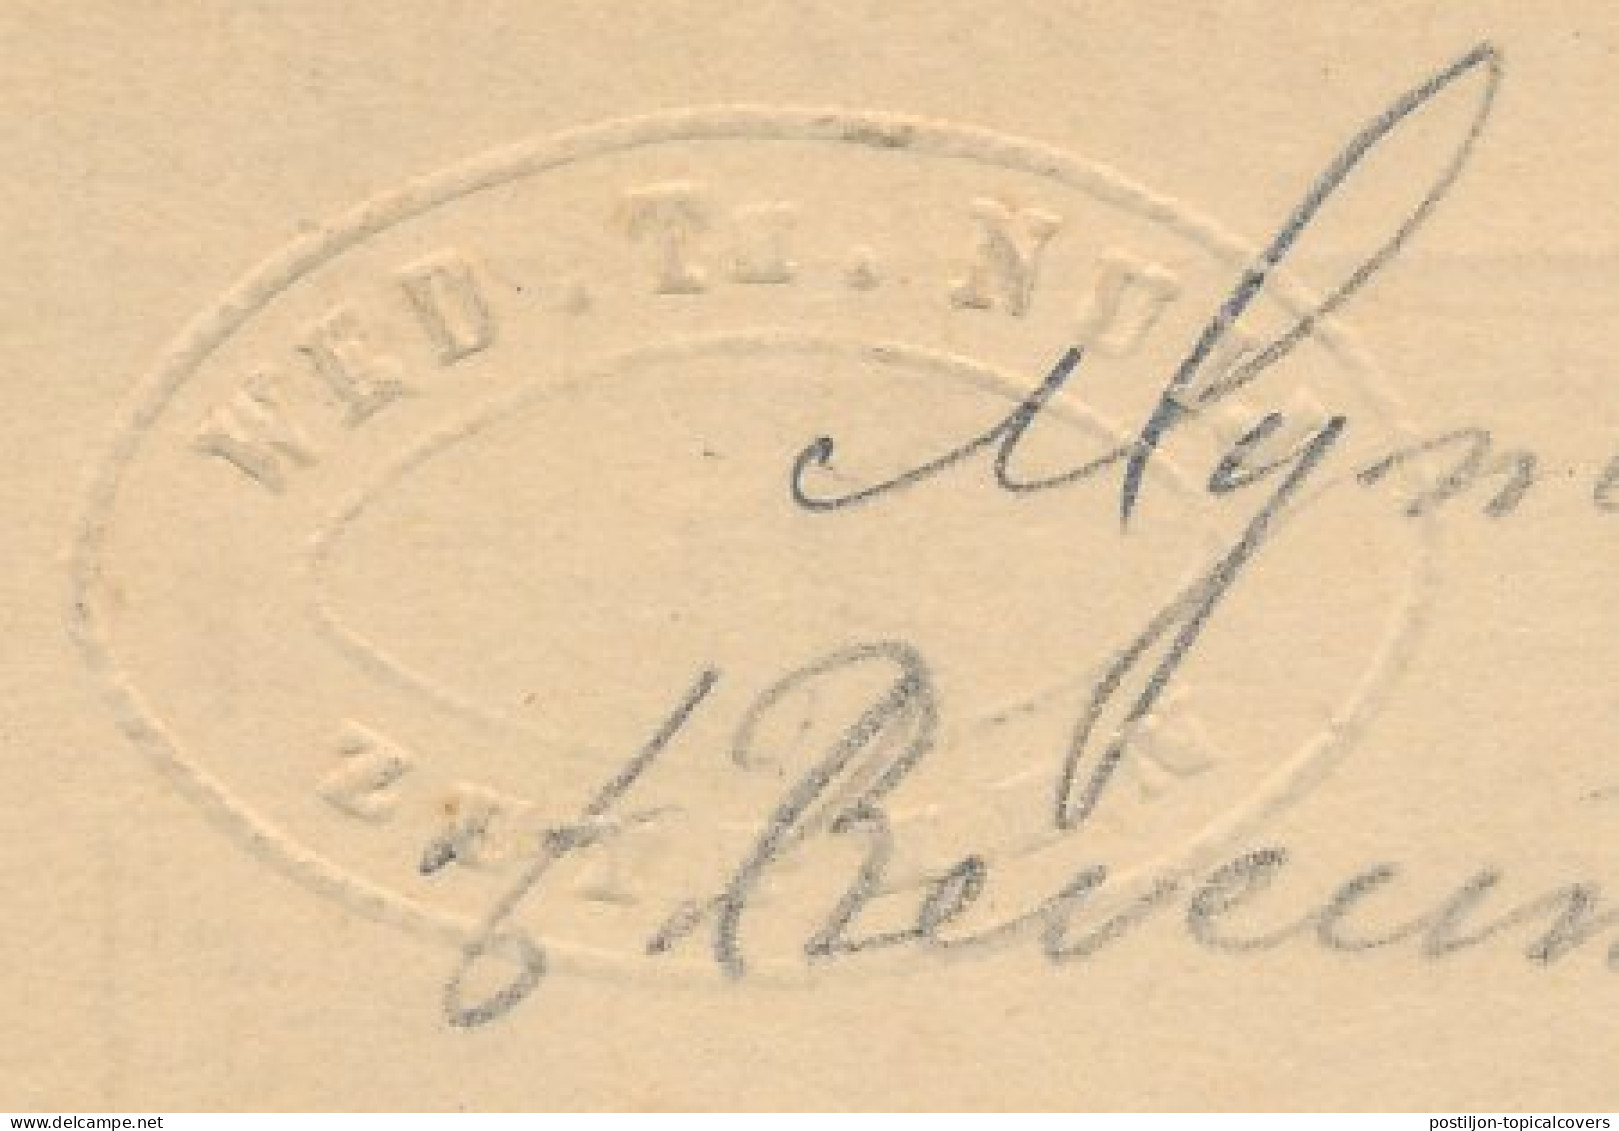 Briefkaart G. Firma 7 Blinddruk Zutphen 1876 - Postal Stationery